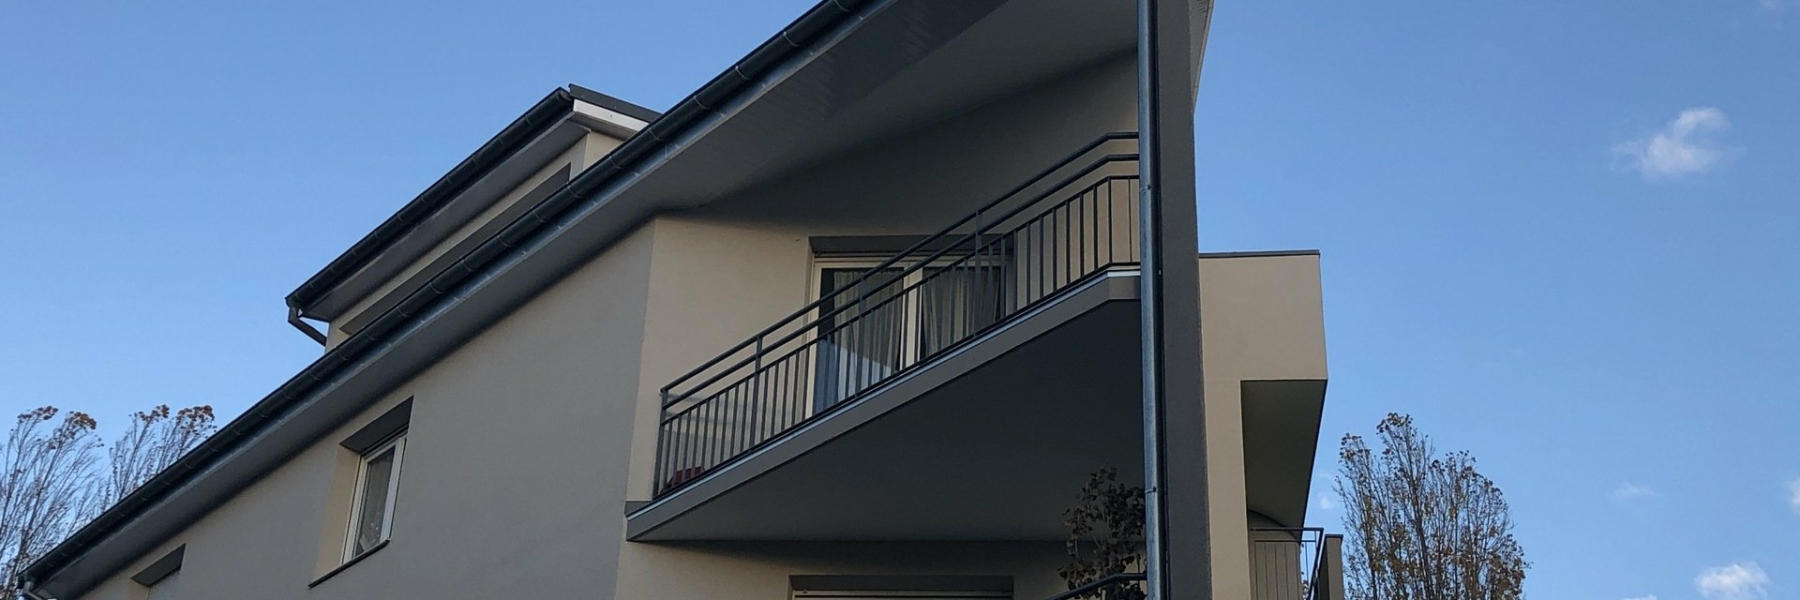 rénovation immeuble avec balcon